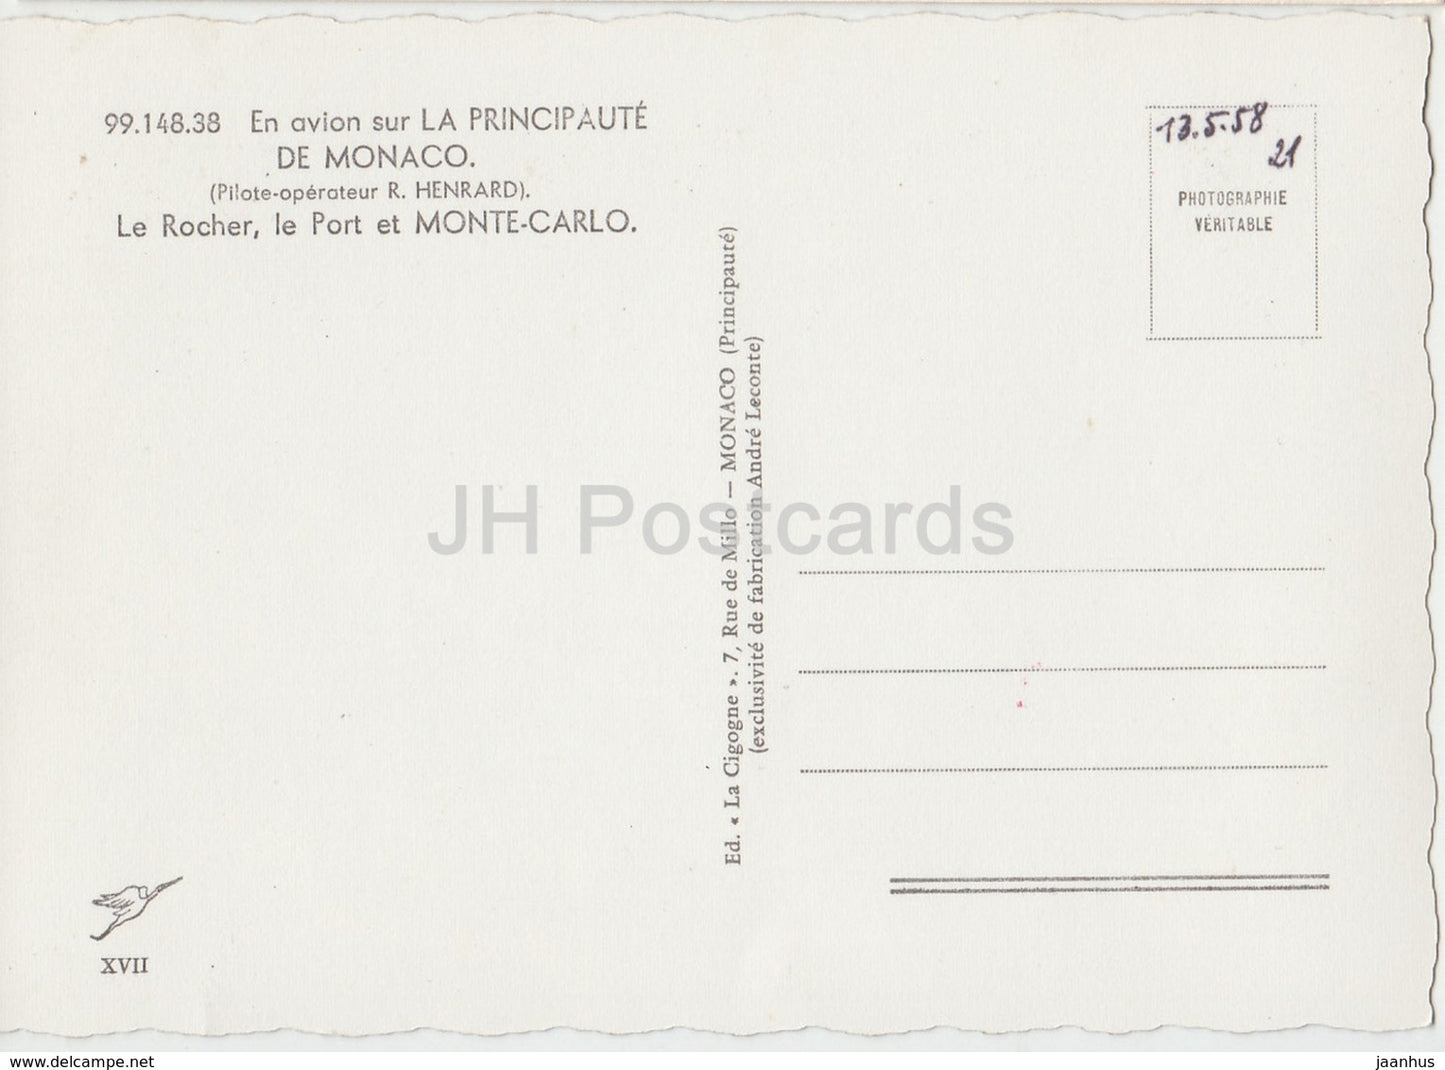 en avion sur Monte-Carlo - Le Rocher - Le Port -1958 - Monaco - used